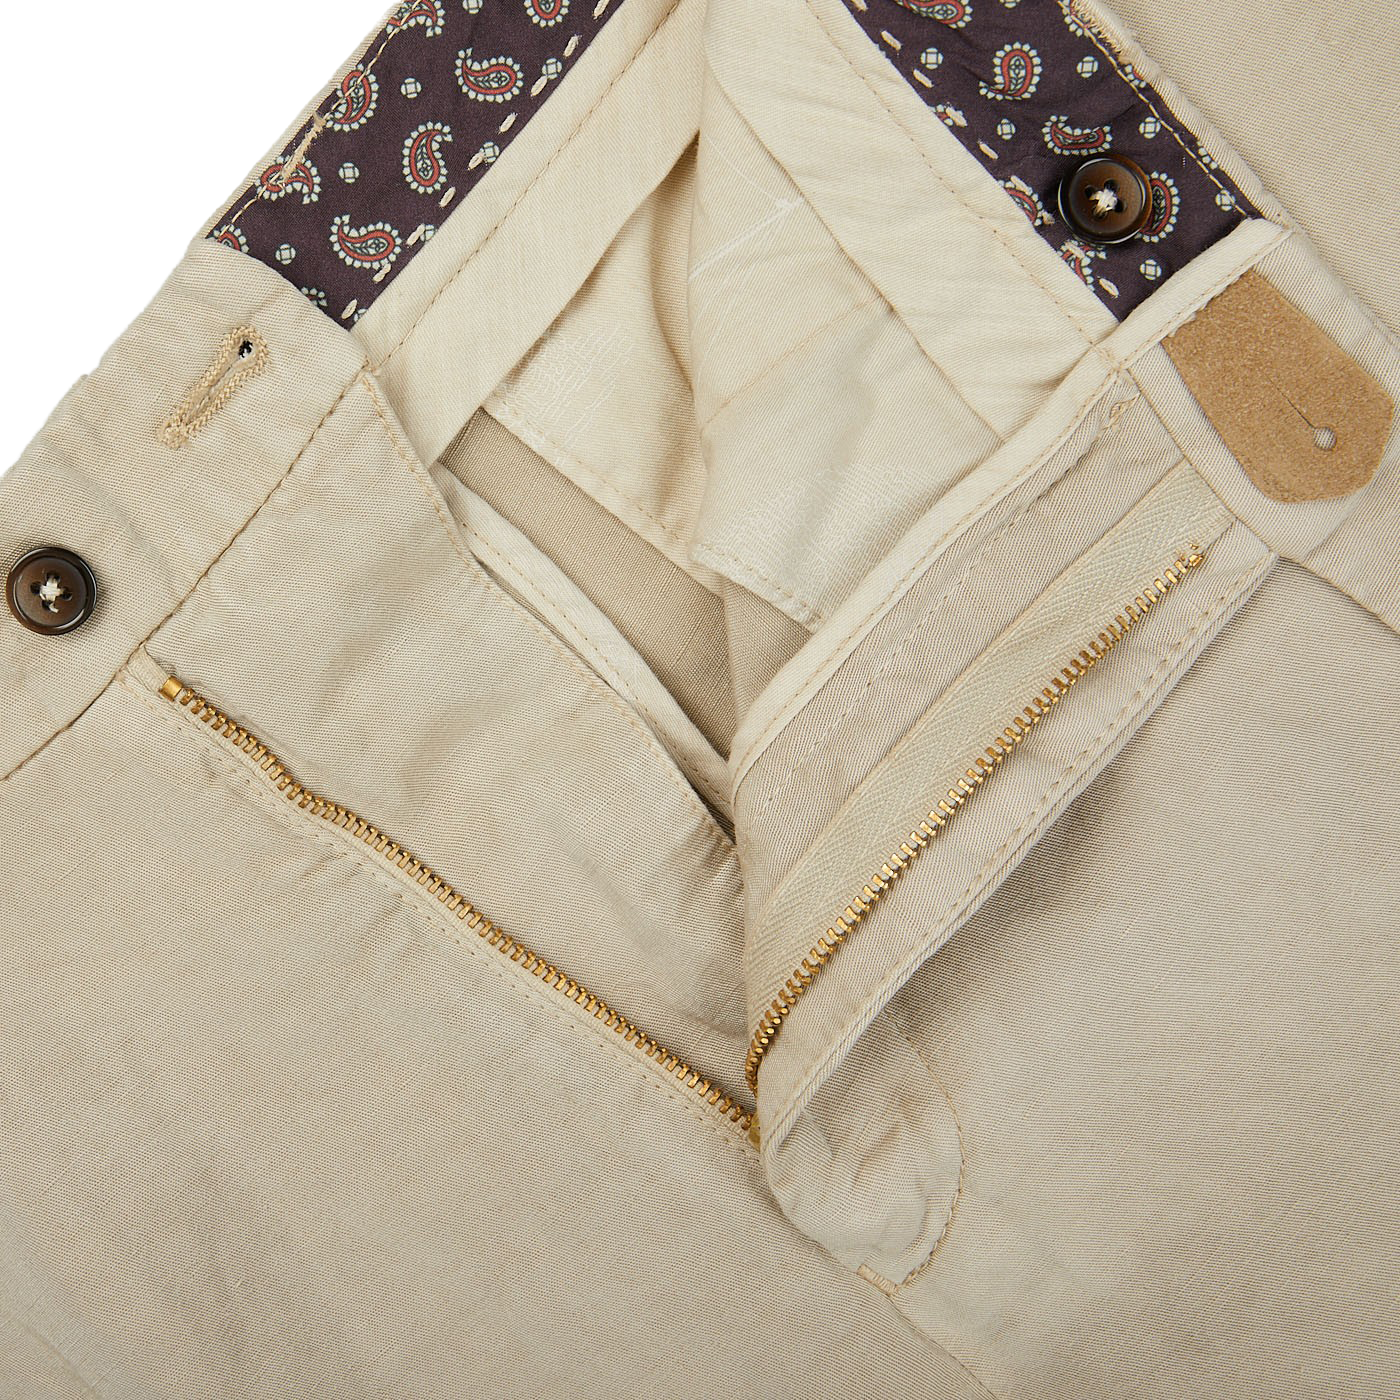 A close up of a pair of Berwich Light Beige Linen Blend Flat Front Trousers.